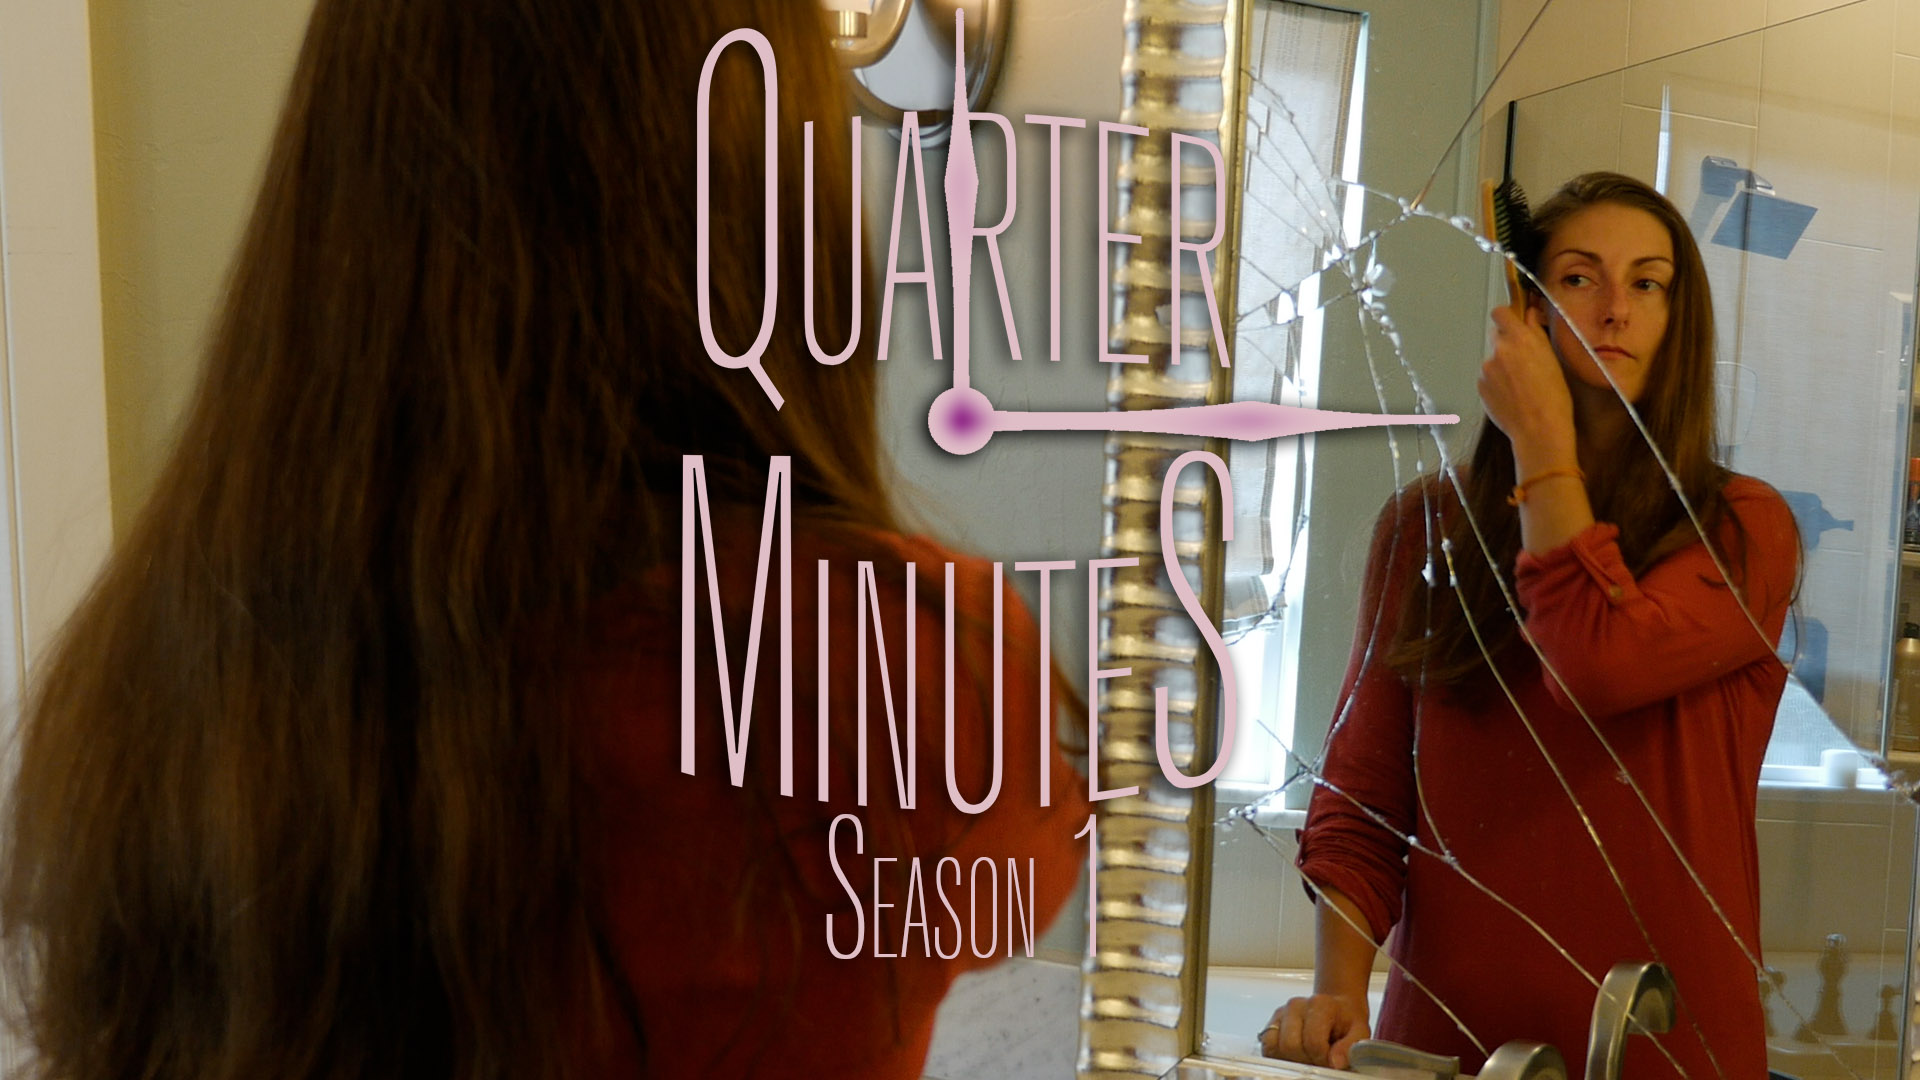 Quarter Minutes for Season 1